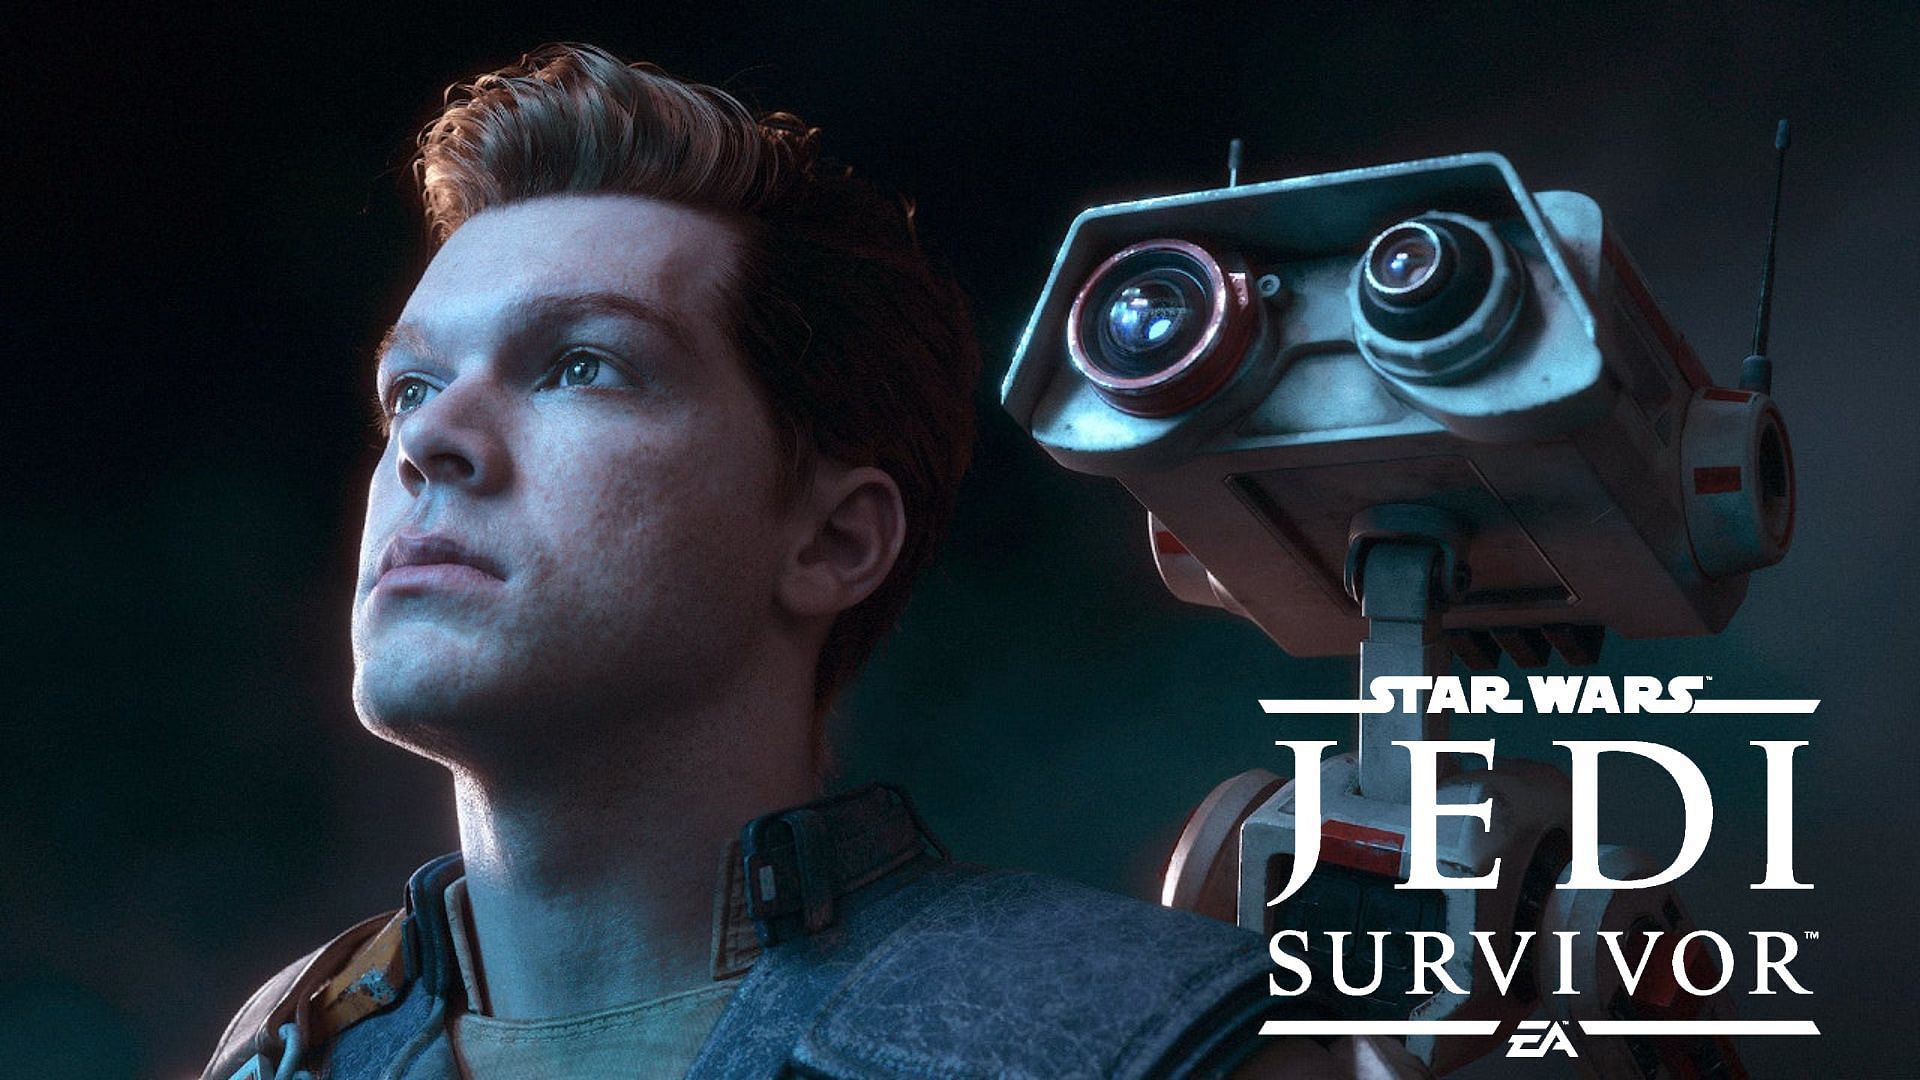 Star Wars Jedi: Survivor is a sequel game (Image by EA)